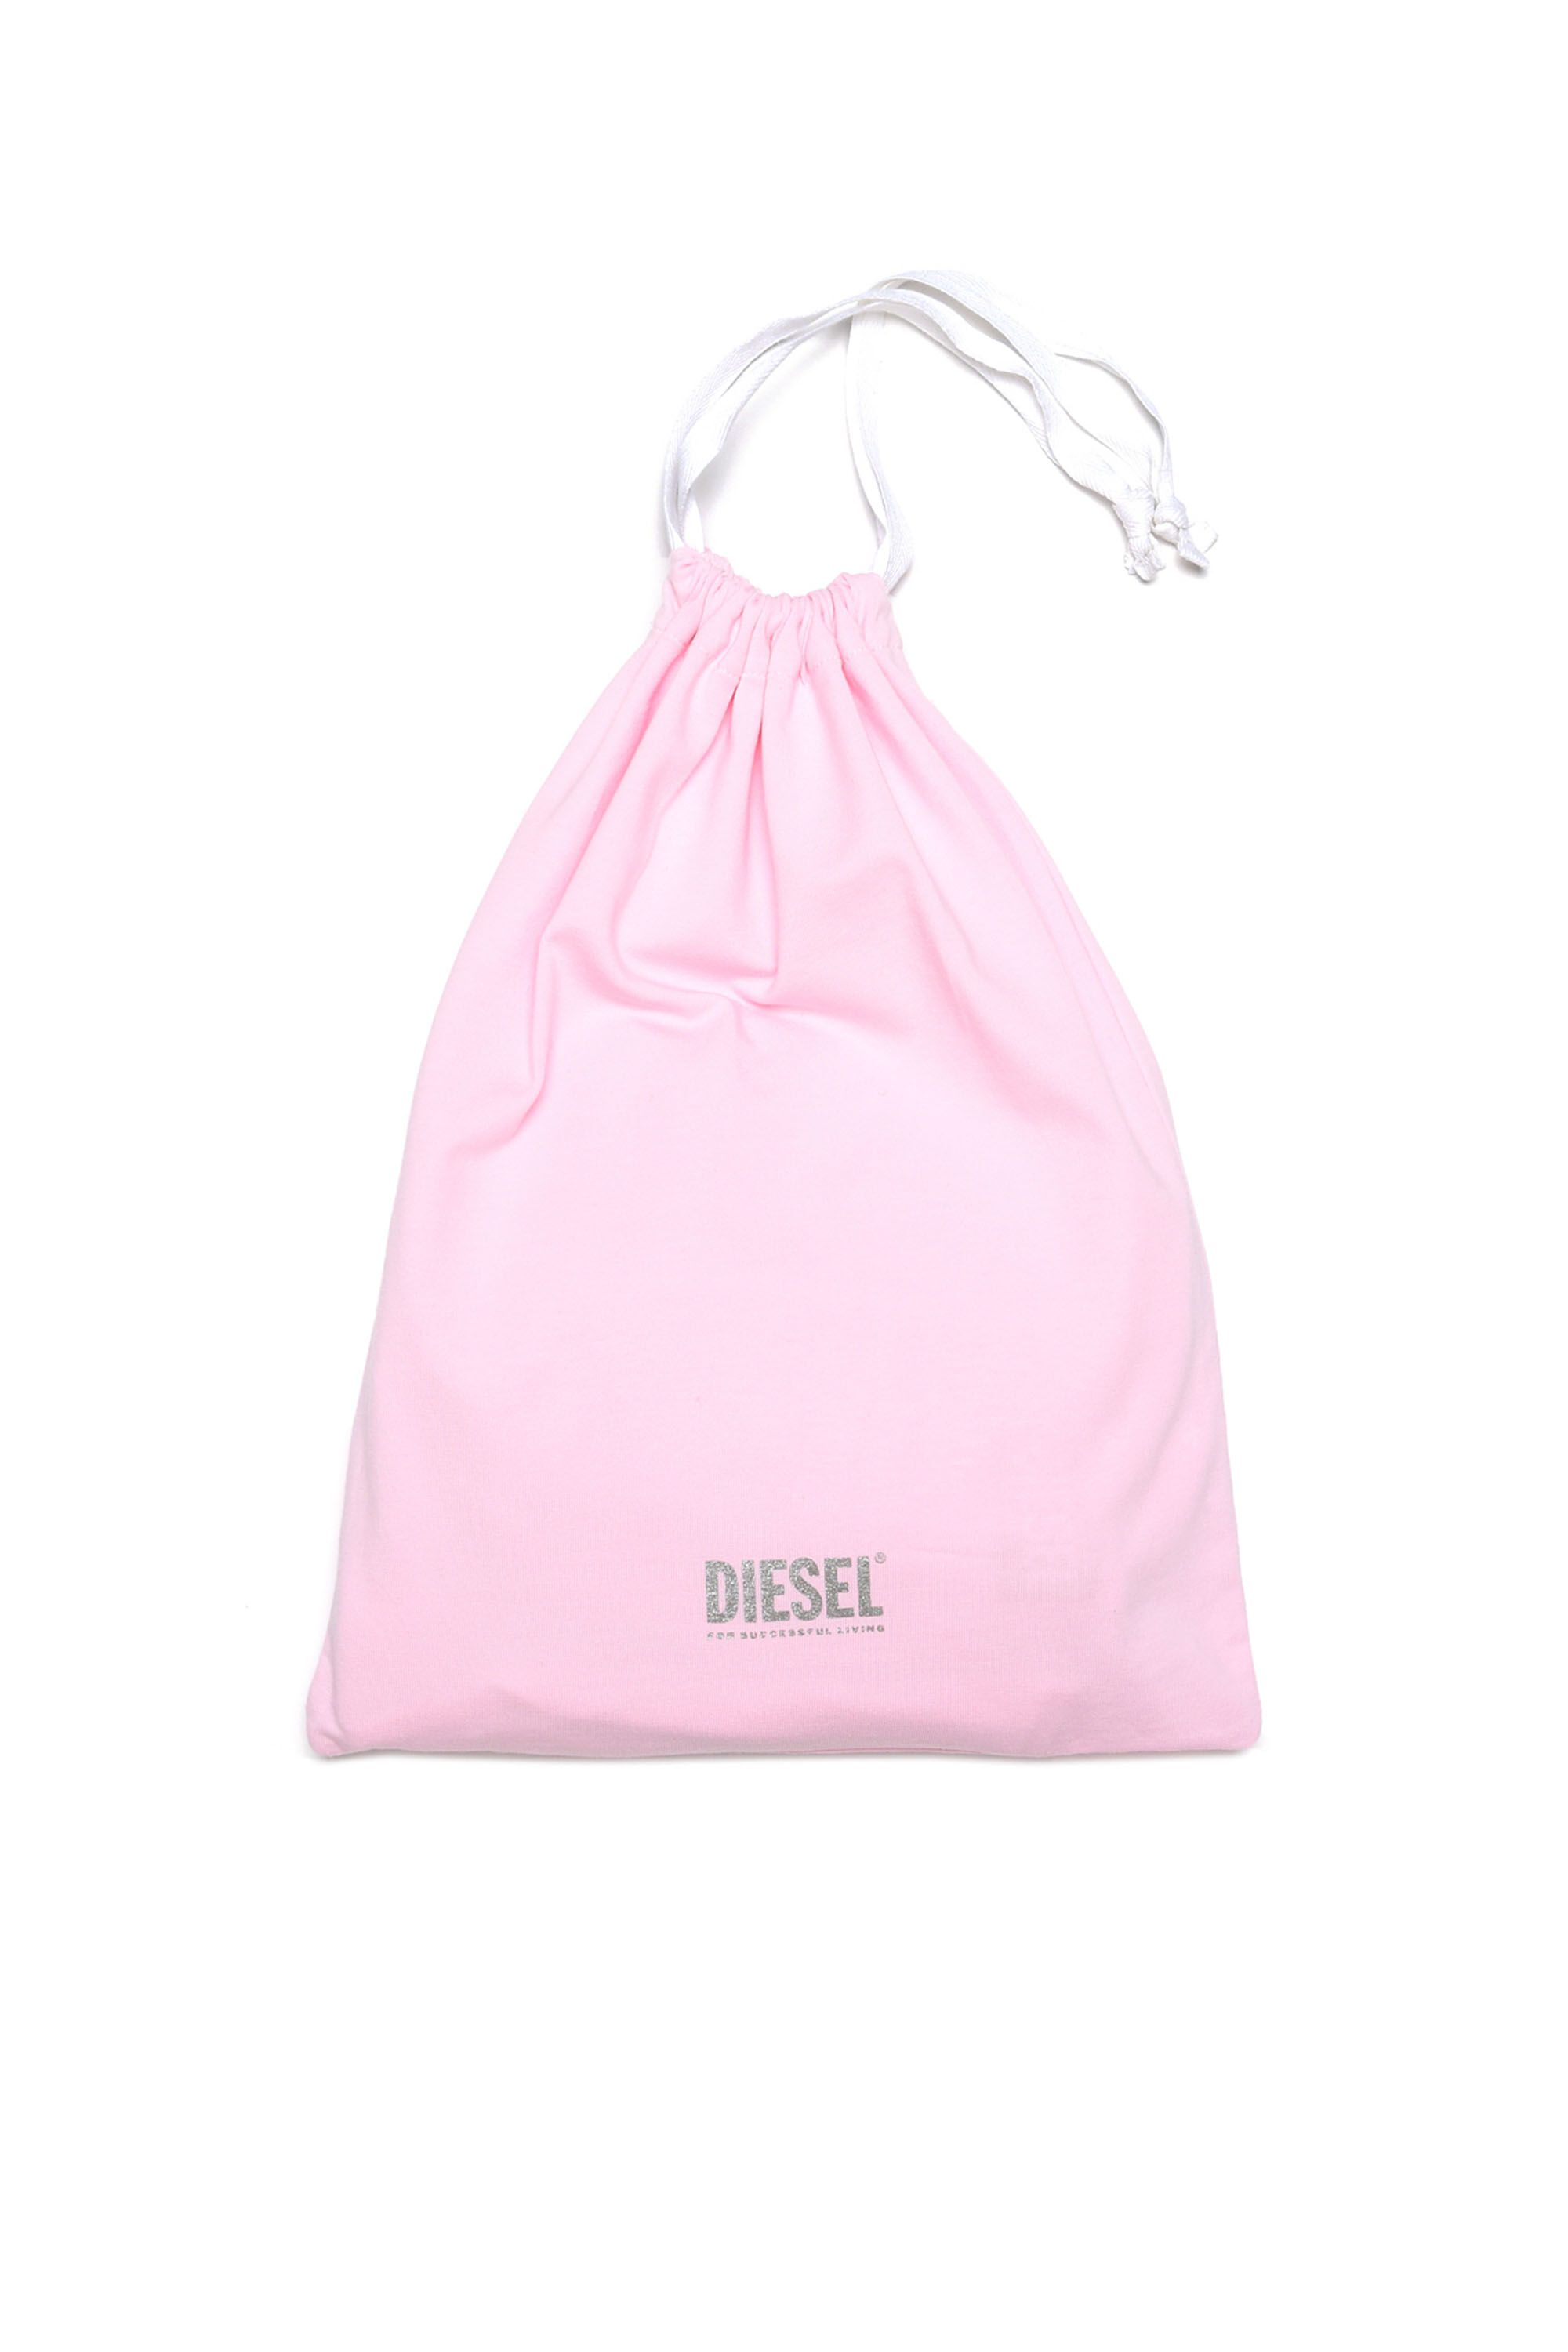 Diesel - UNESIA, Rosa - Image 4